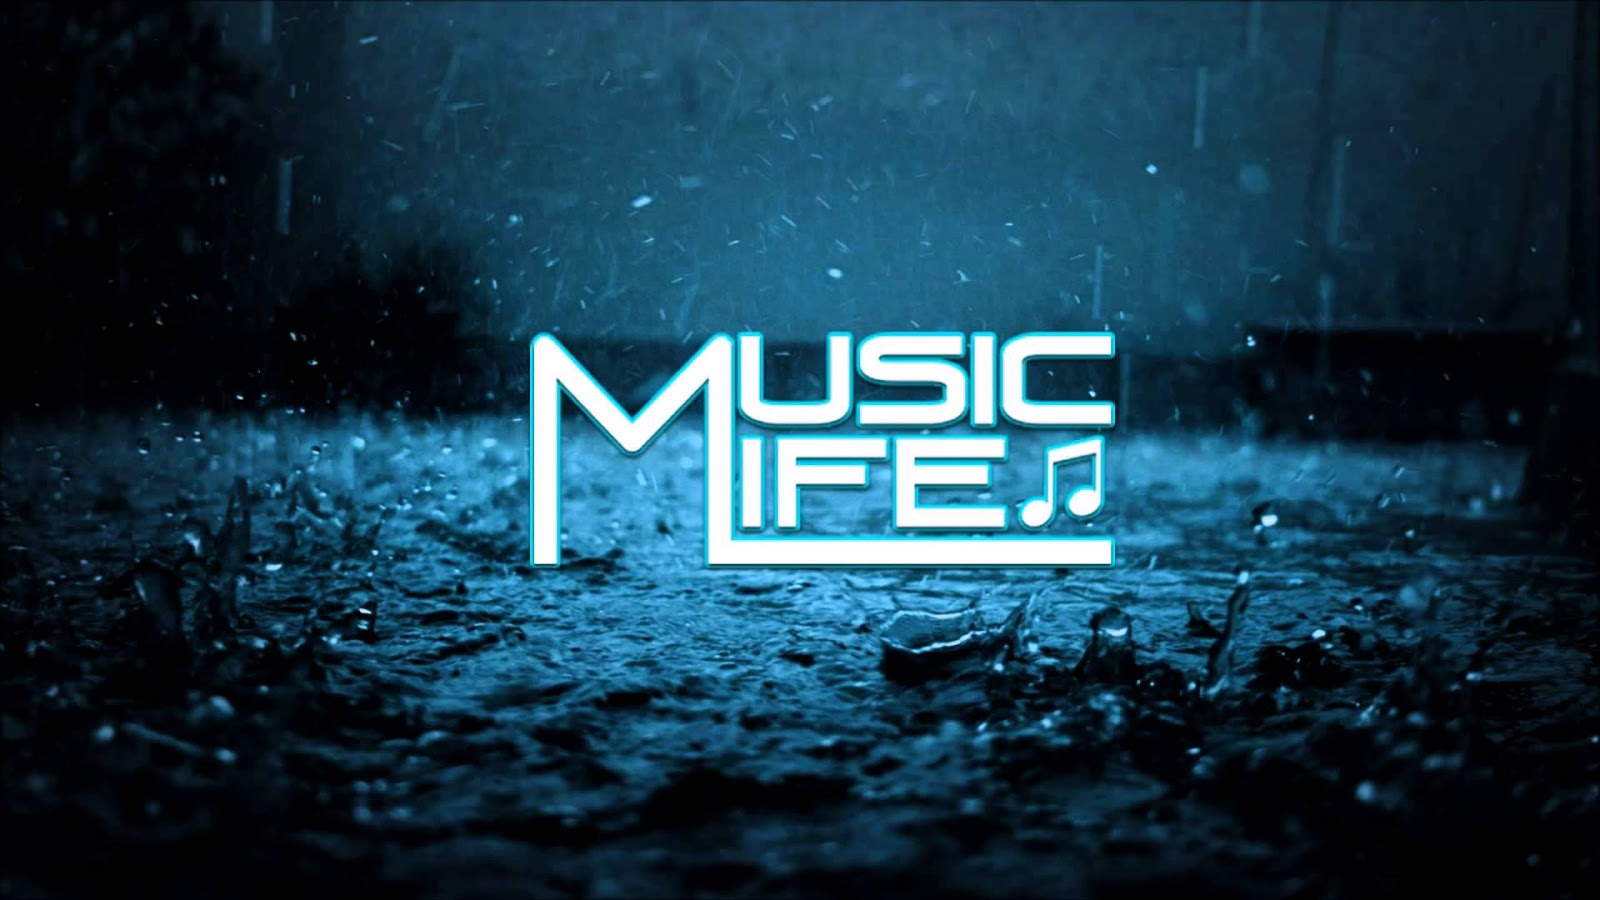 Music life 1. Music надпись. Мьюзик лайф. Картинки с надписью Music. Music Life логотип.